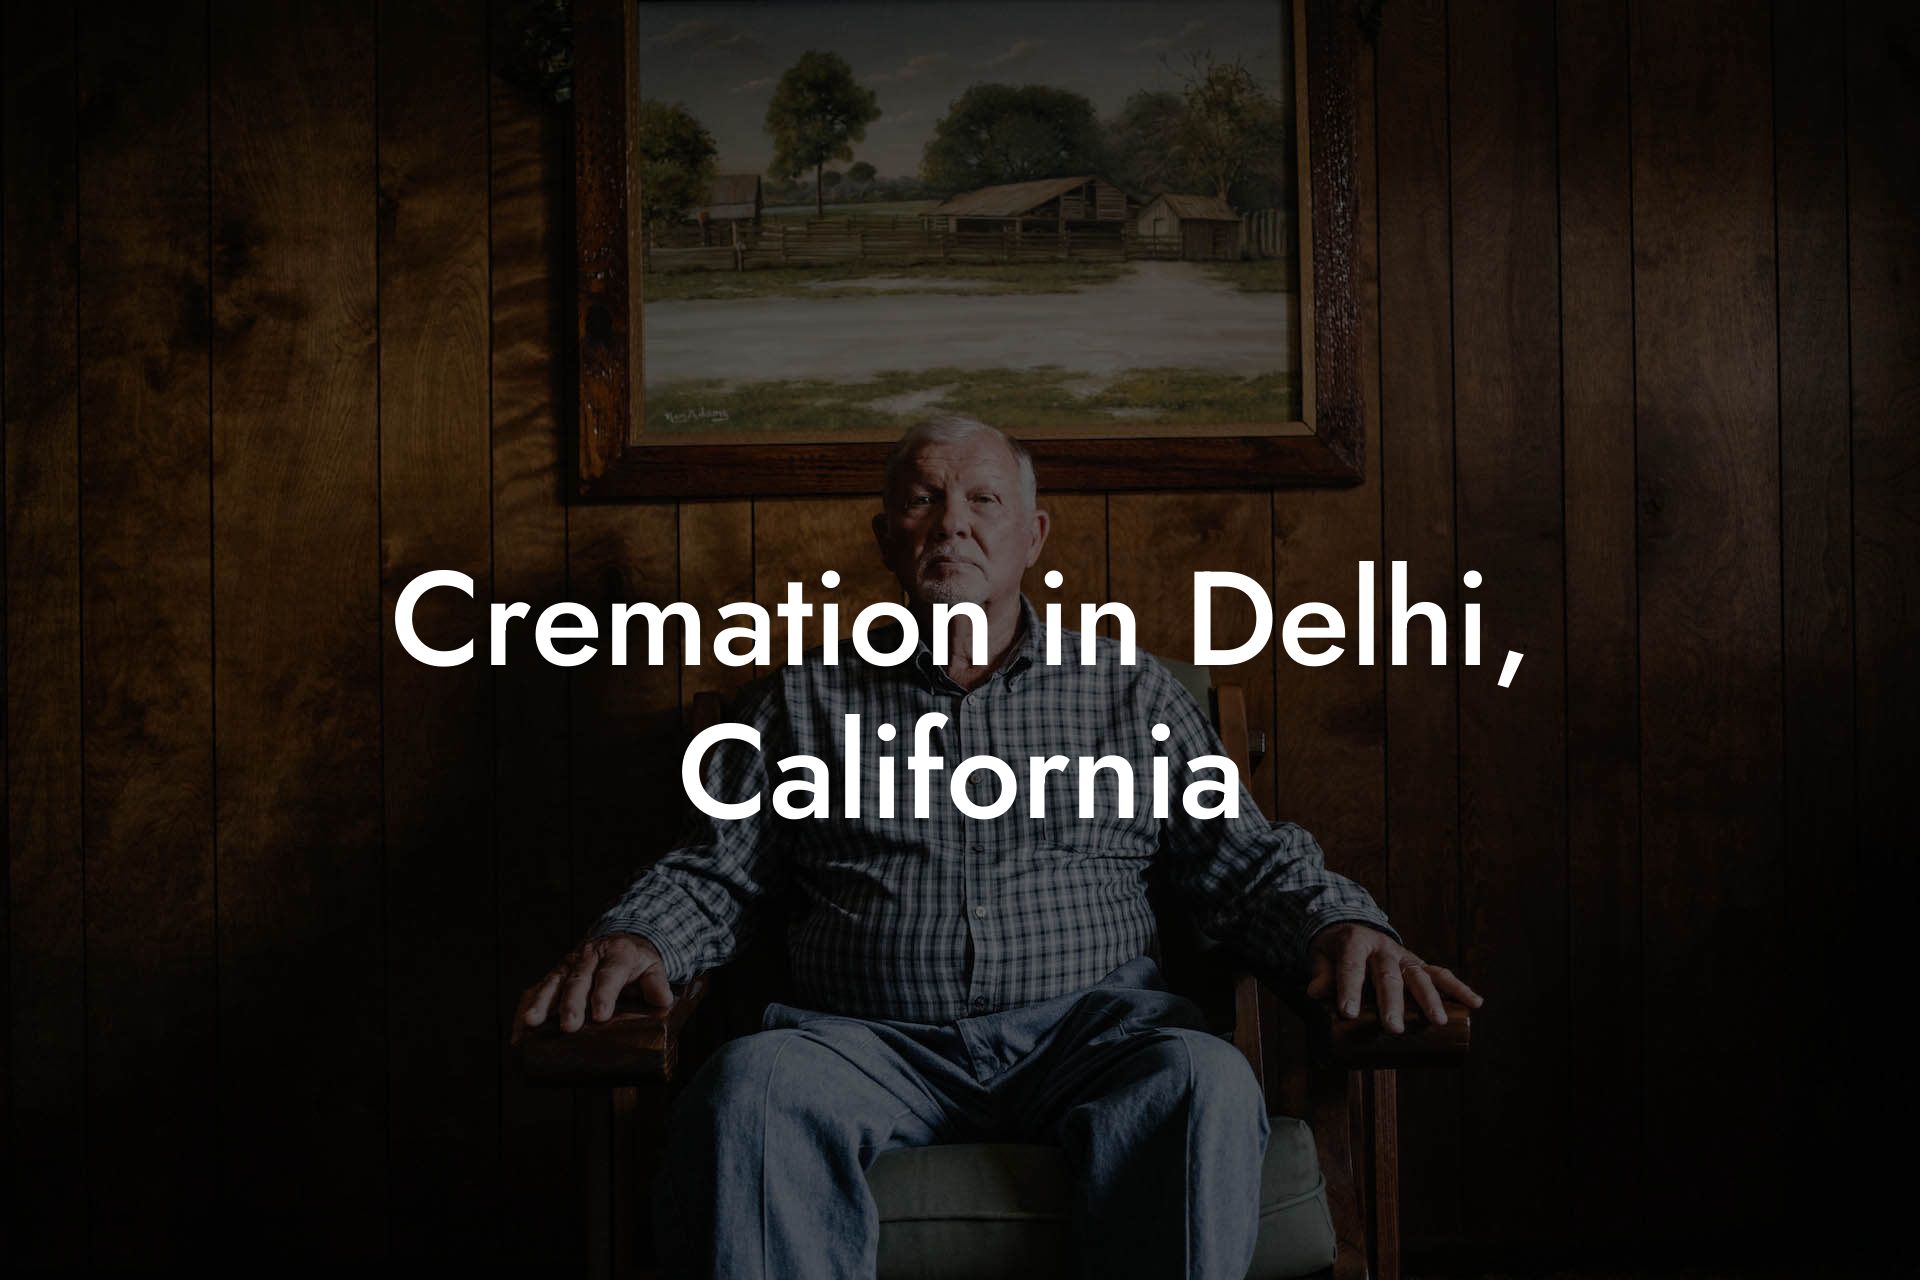 Cremation in Delhi, California